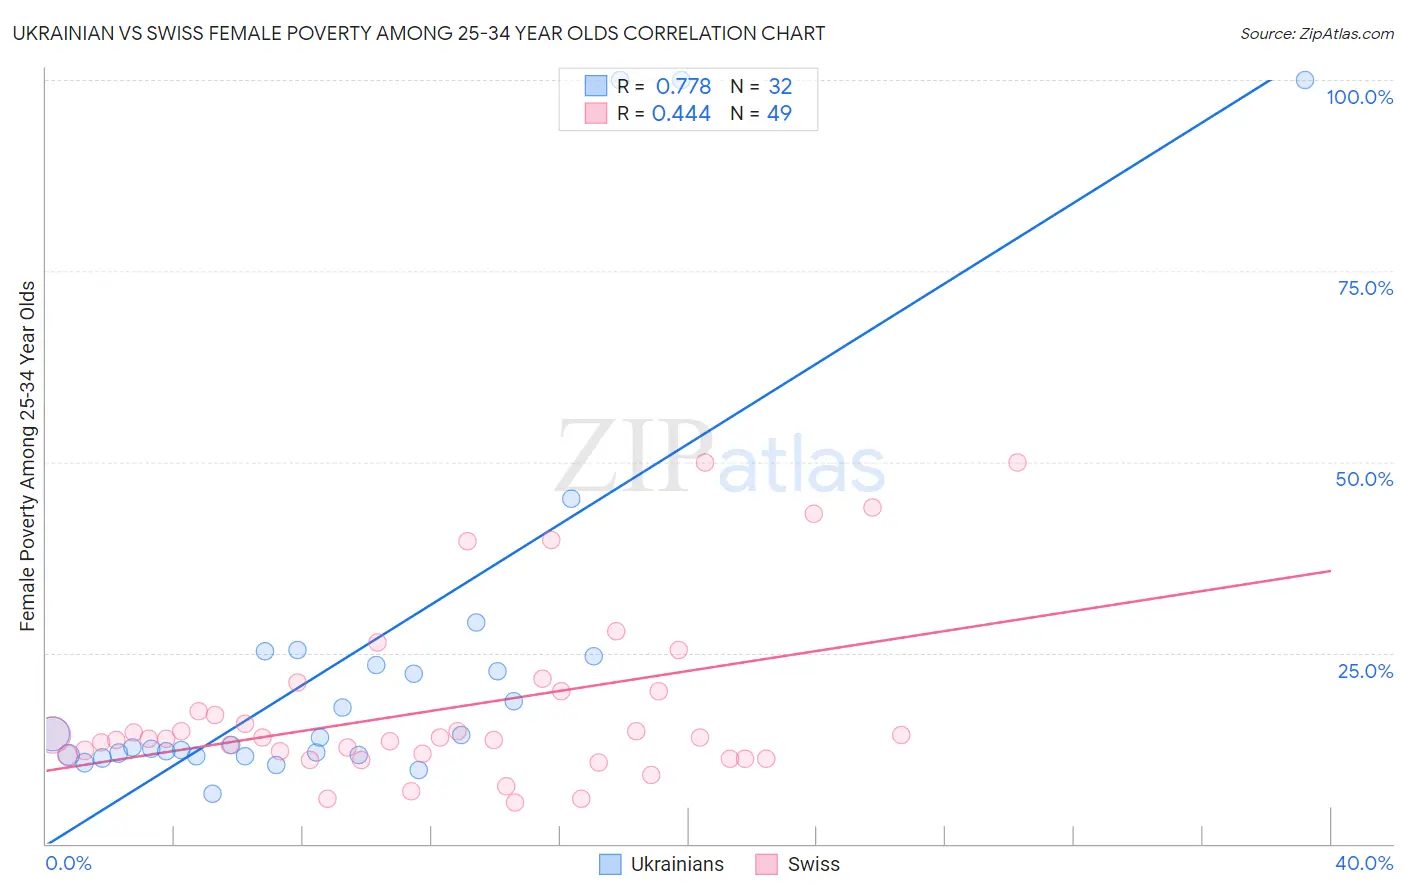 Ukrainian vs Swiss Female Poverty Among 25-34 Year Olds